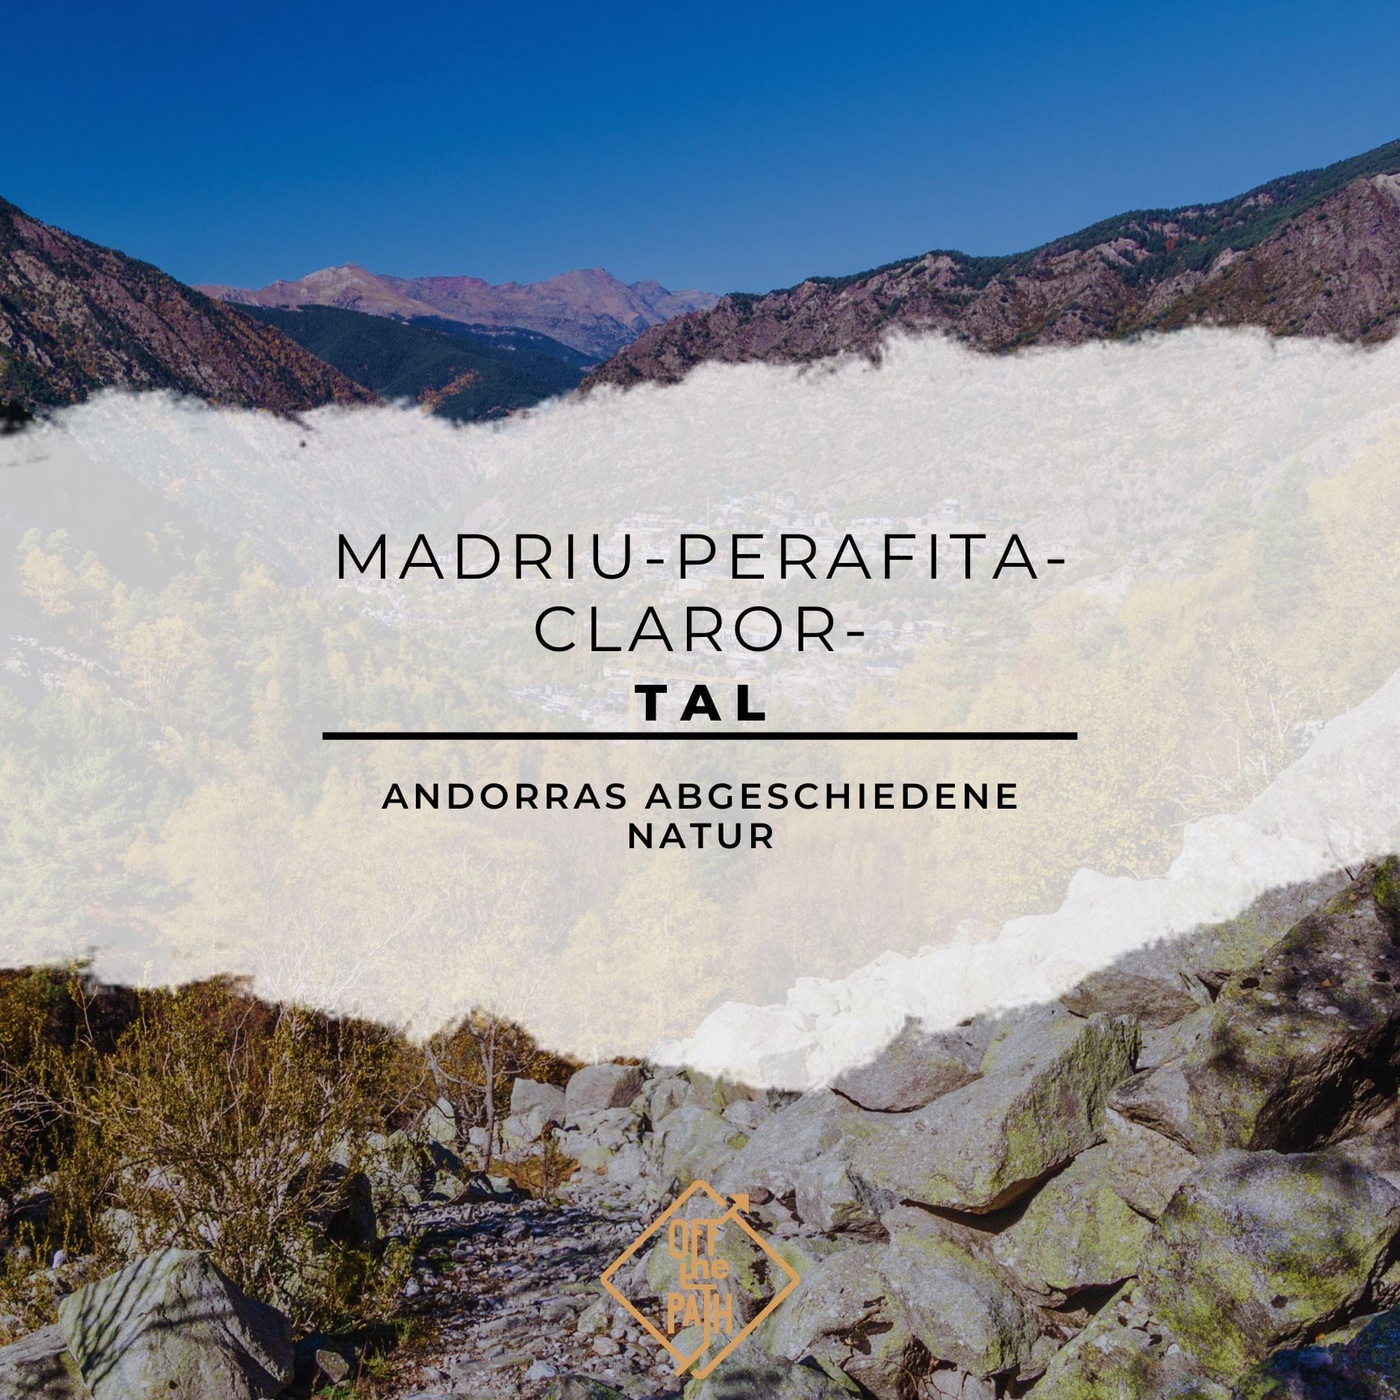 Andorras abgeschiedene Natur: Wanderpfade im Madriu-Perafita-Claror-Tal